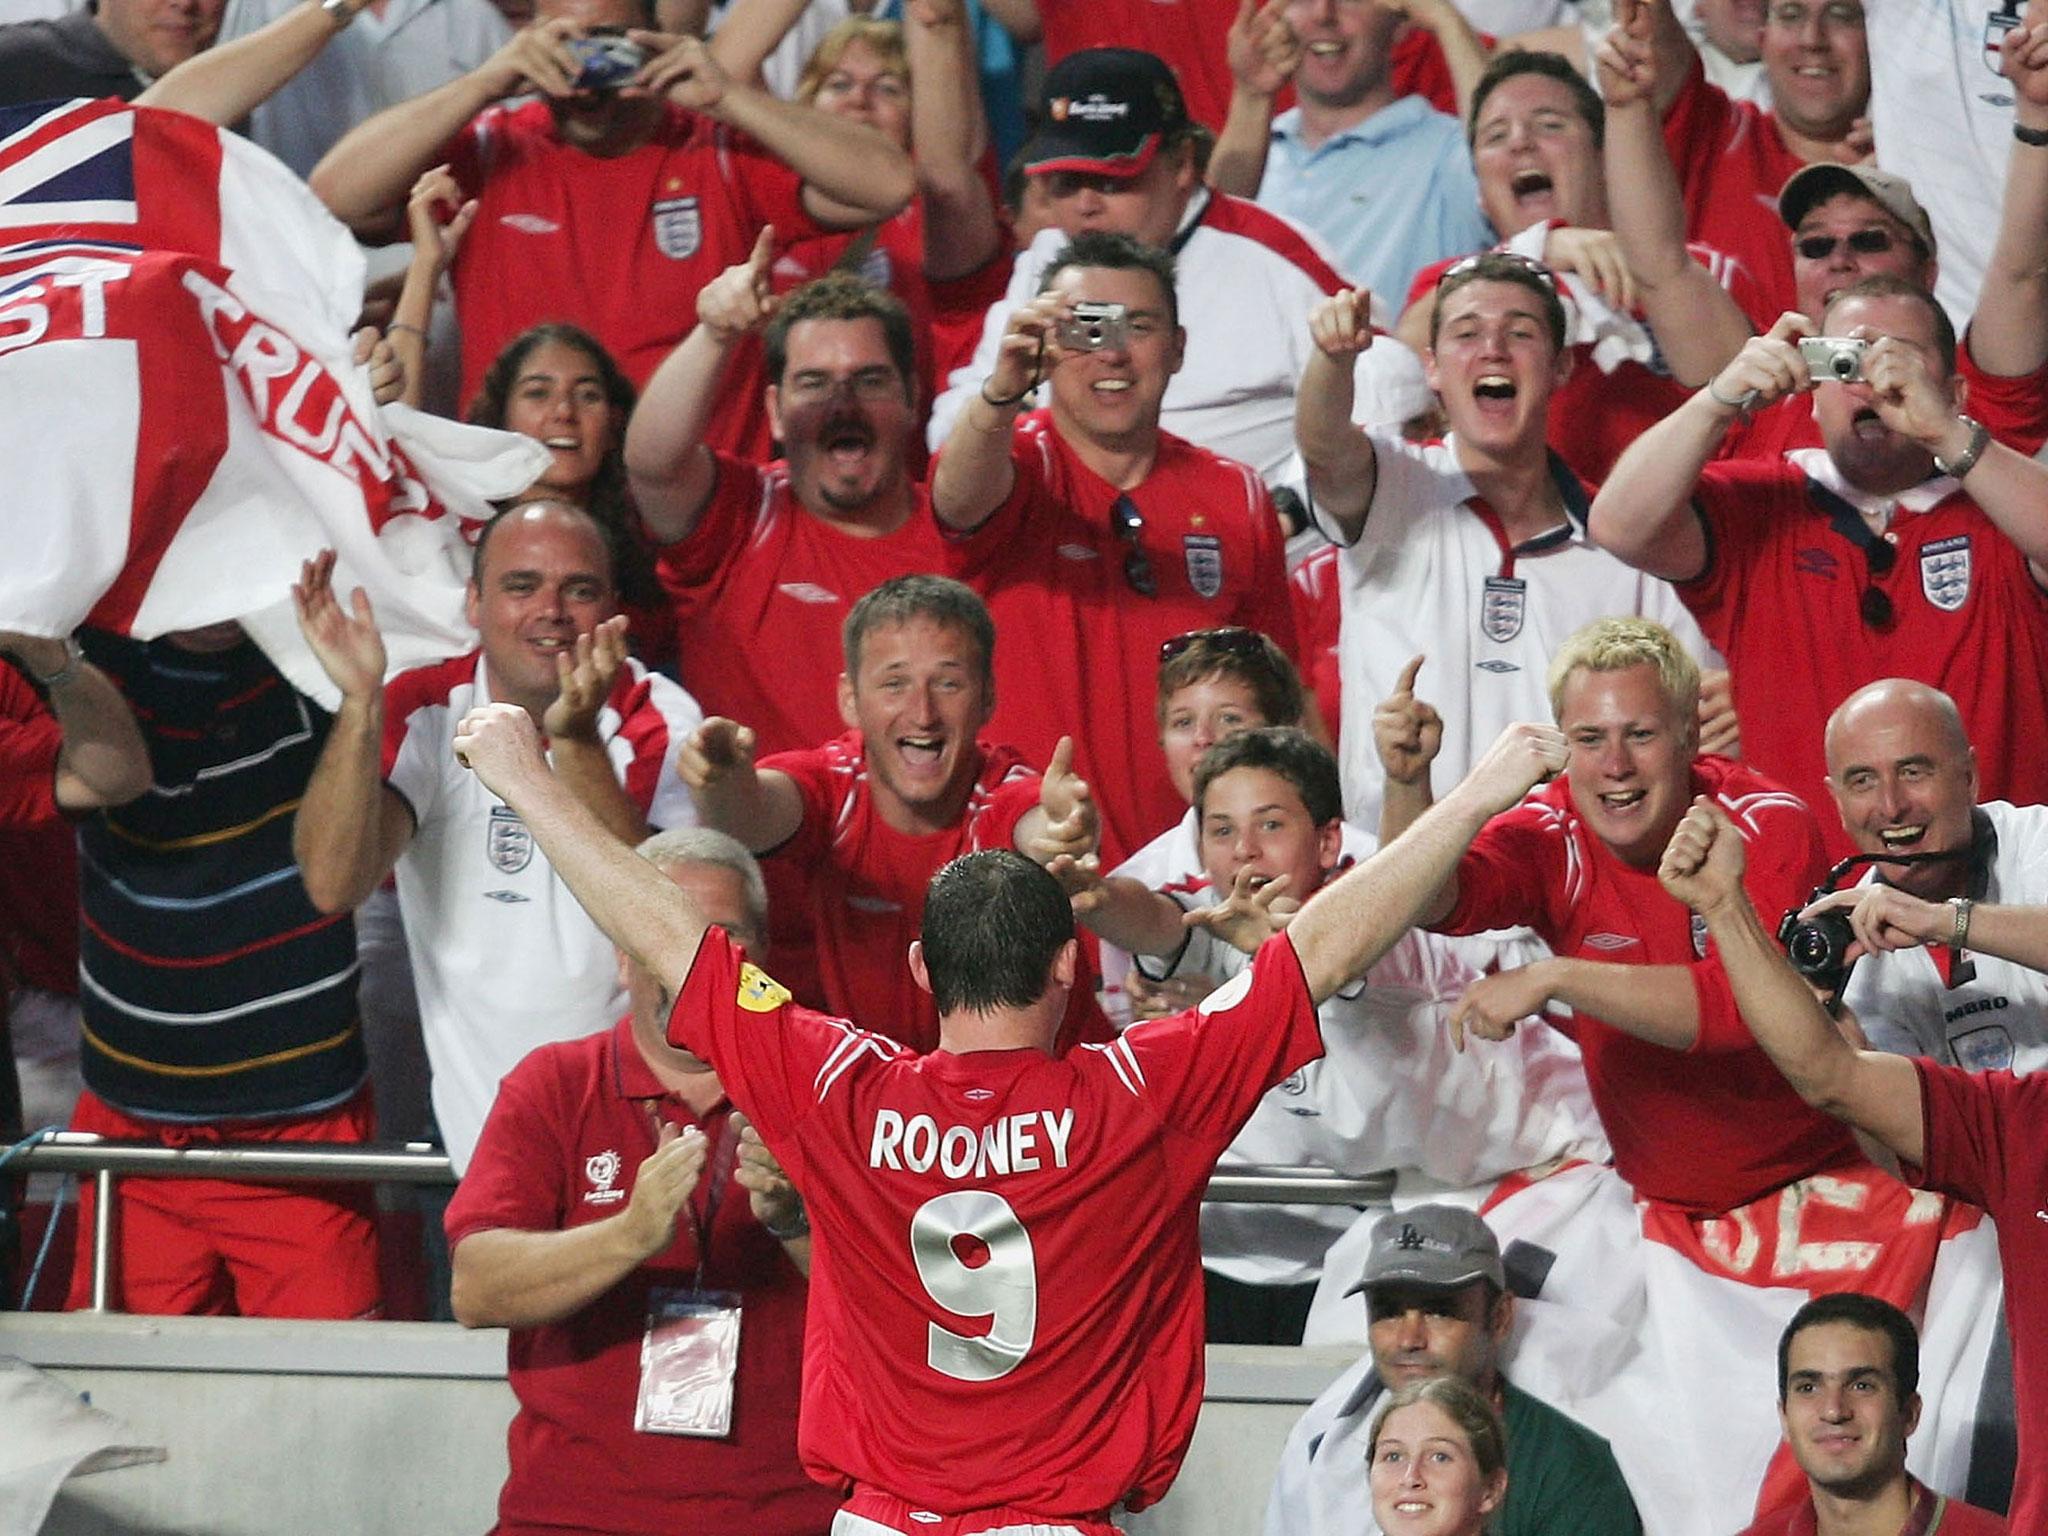 Wayne Rooney's England career had many goals, but too few tournament moments